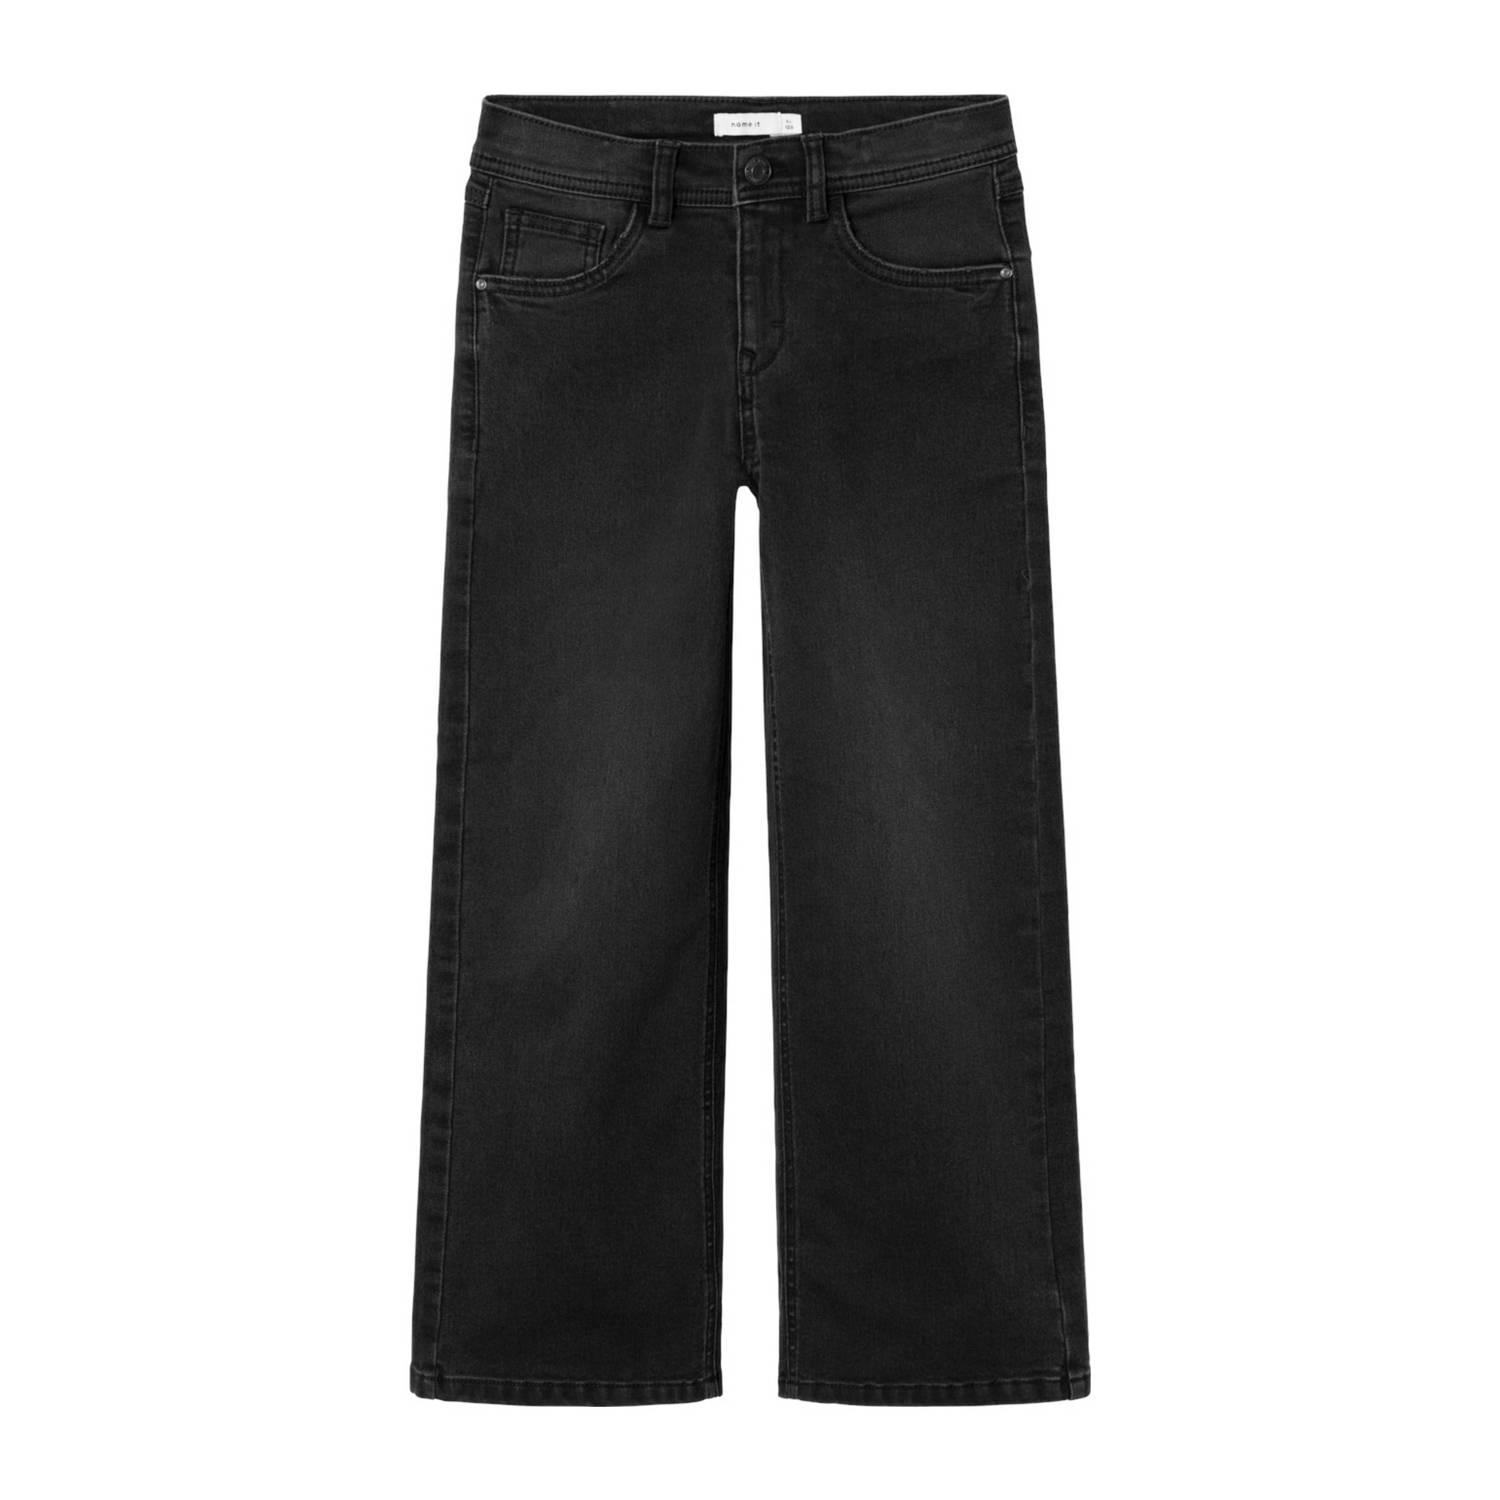 Name it KIDS wide leg jeans NKFROSE black denim Zwart Meisjes Stretchdenim 116